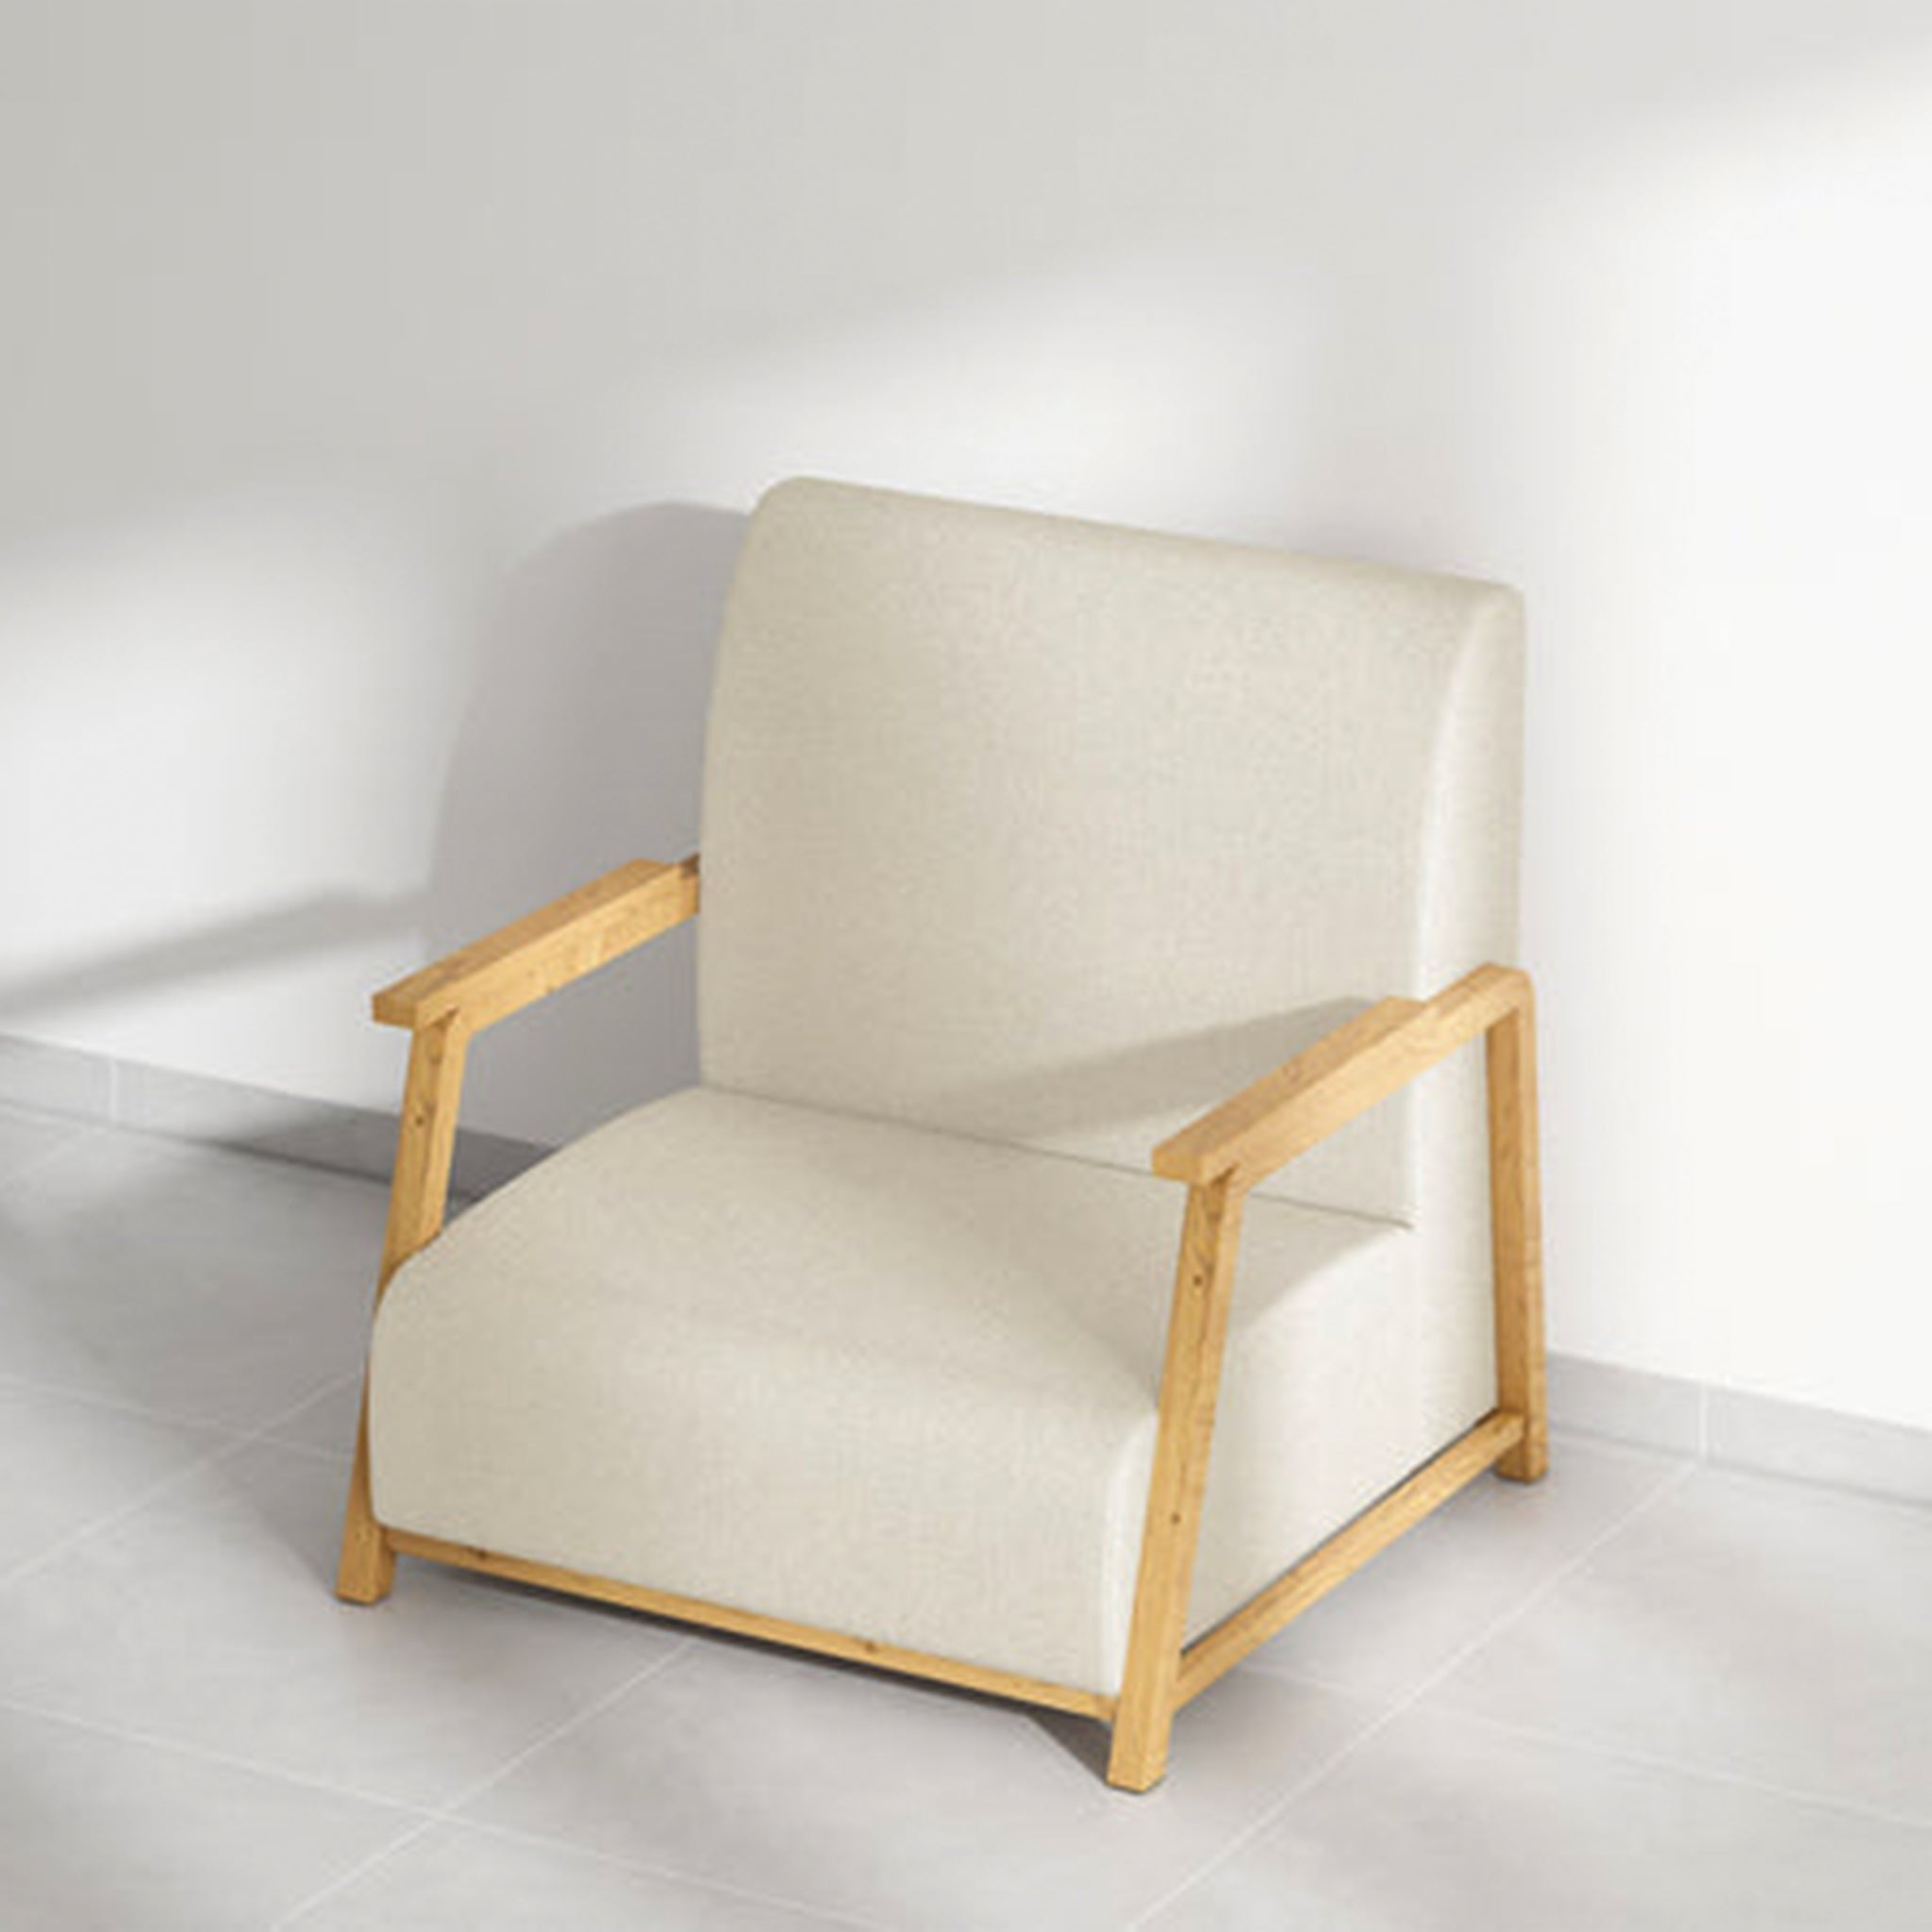 Elegant beige Dixon Arm Accent Chair in a sunlit room.